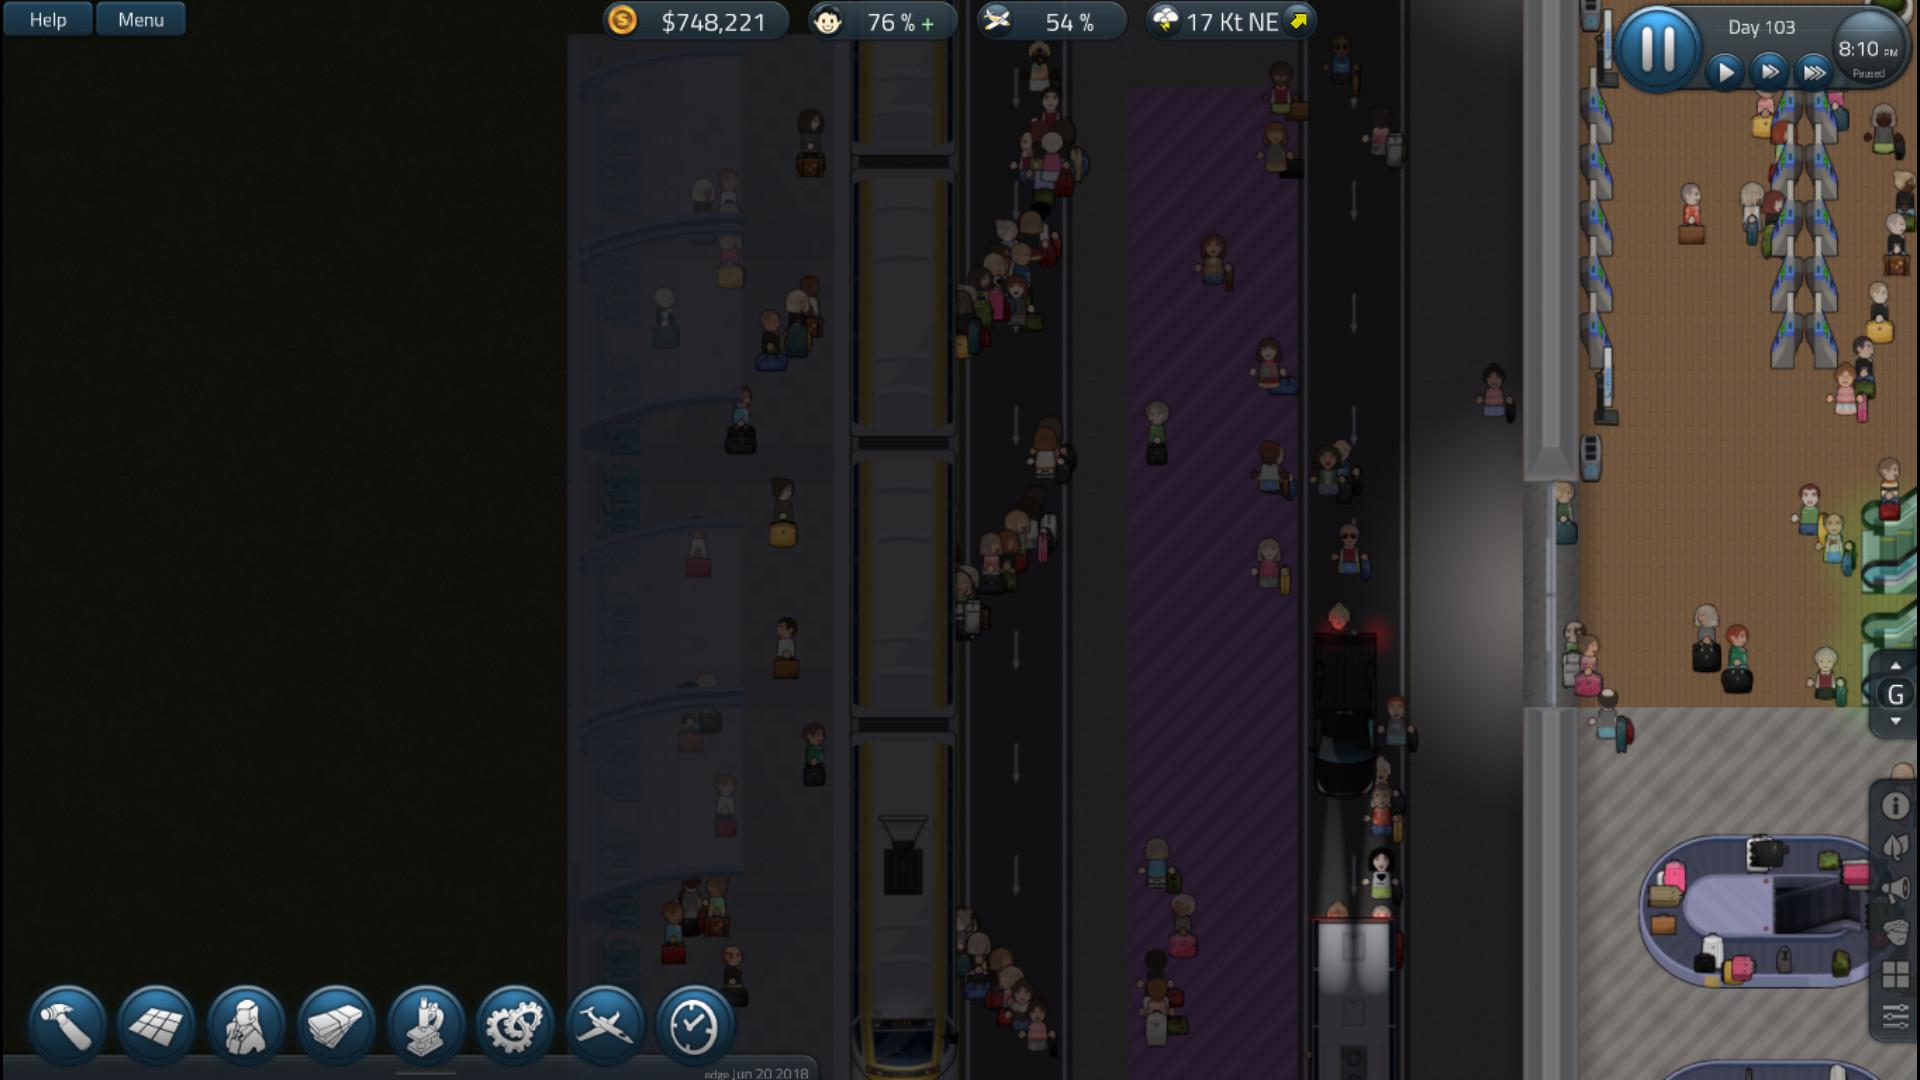 Screenshot №26 from game SimAirport